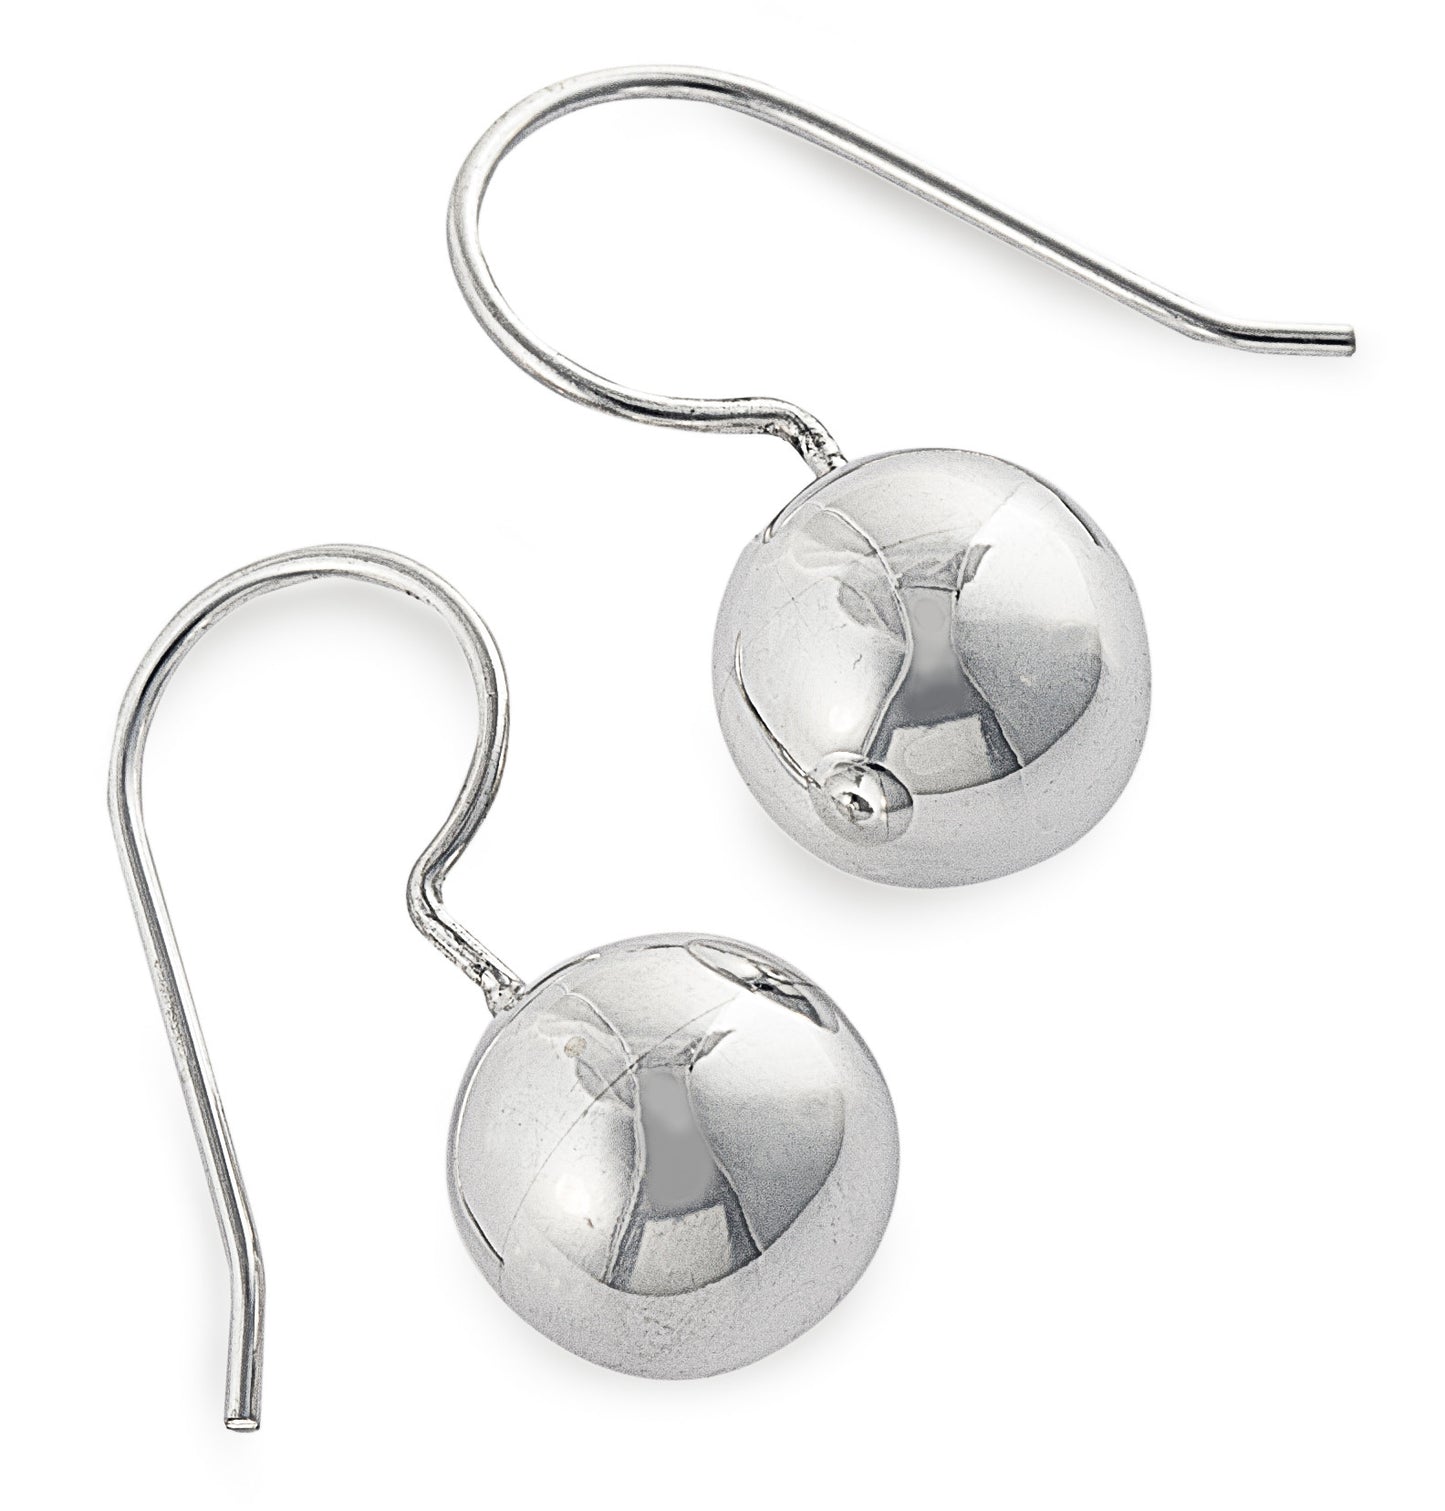 Small 925 Sterling Silver Ball Drop Earrings. 